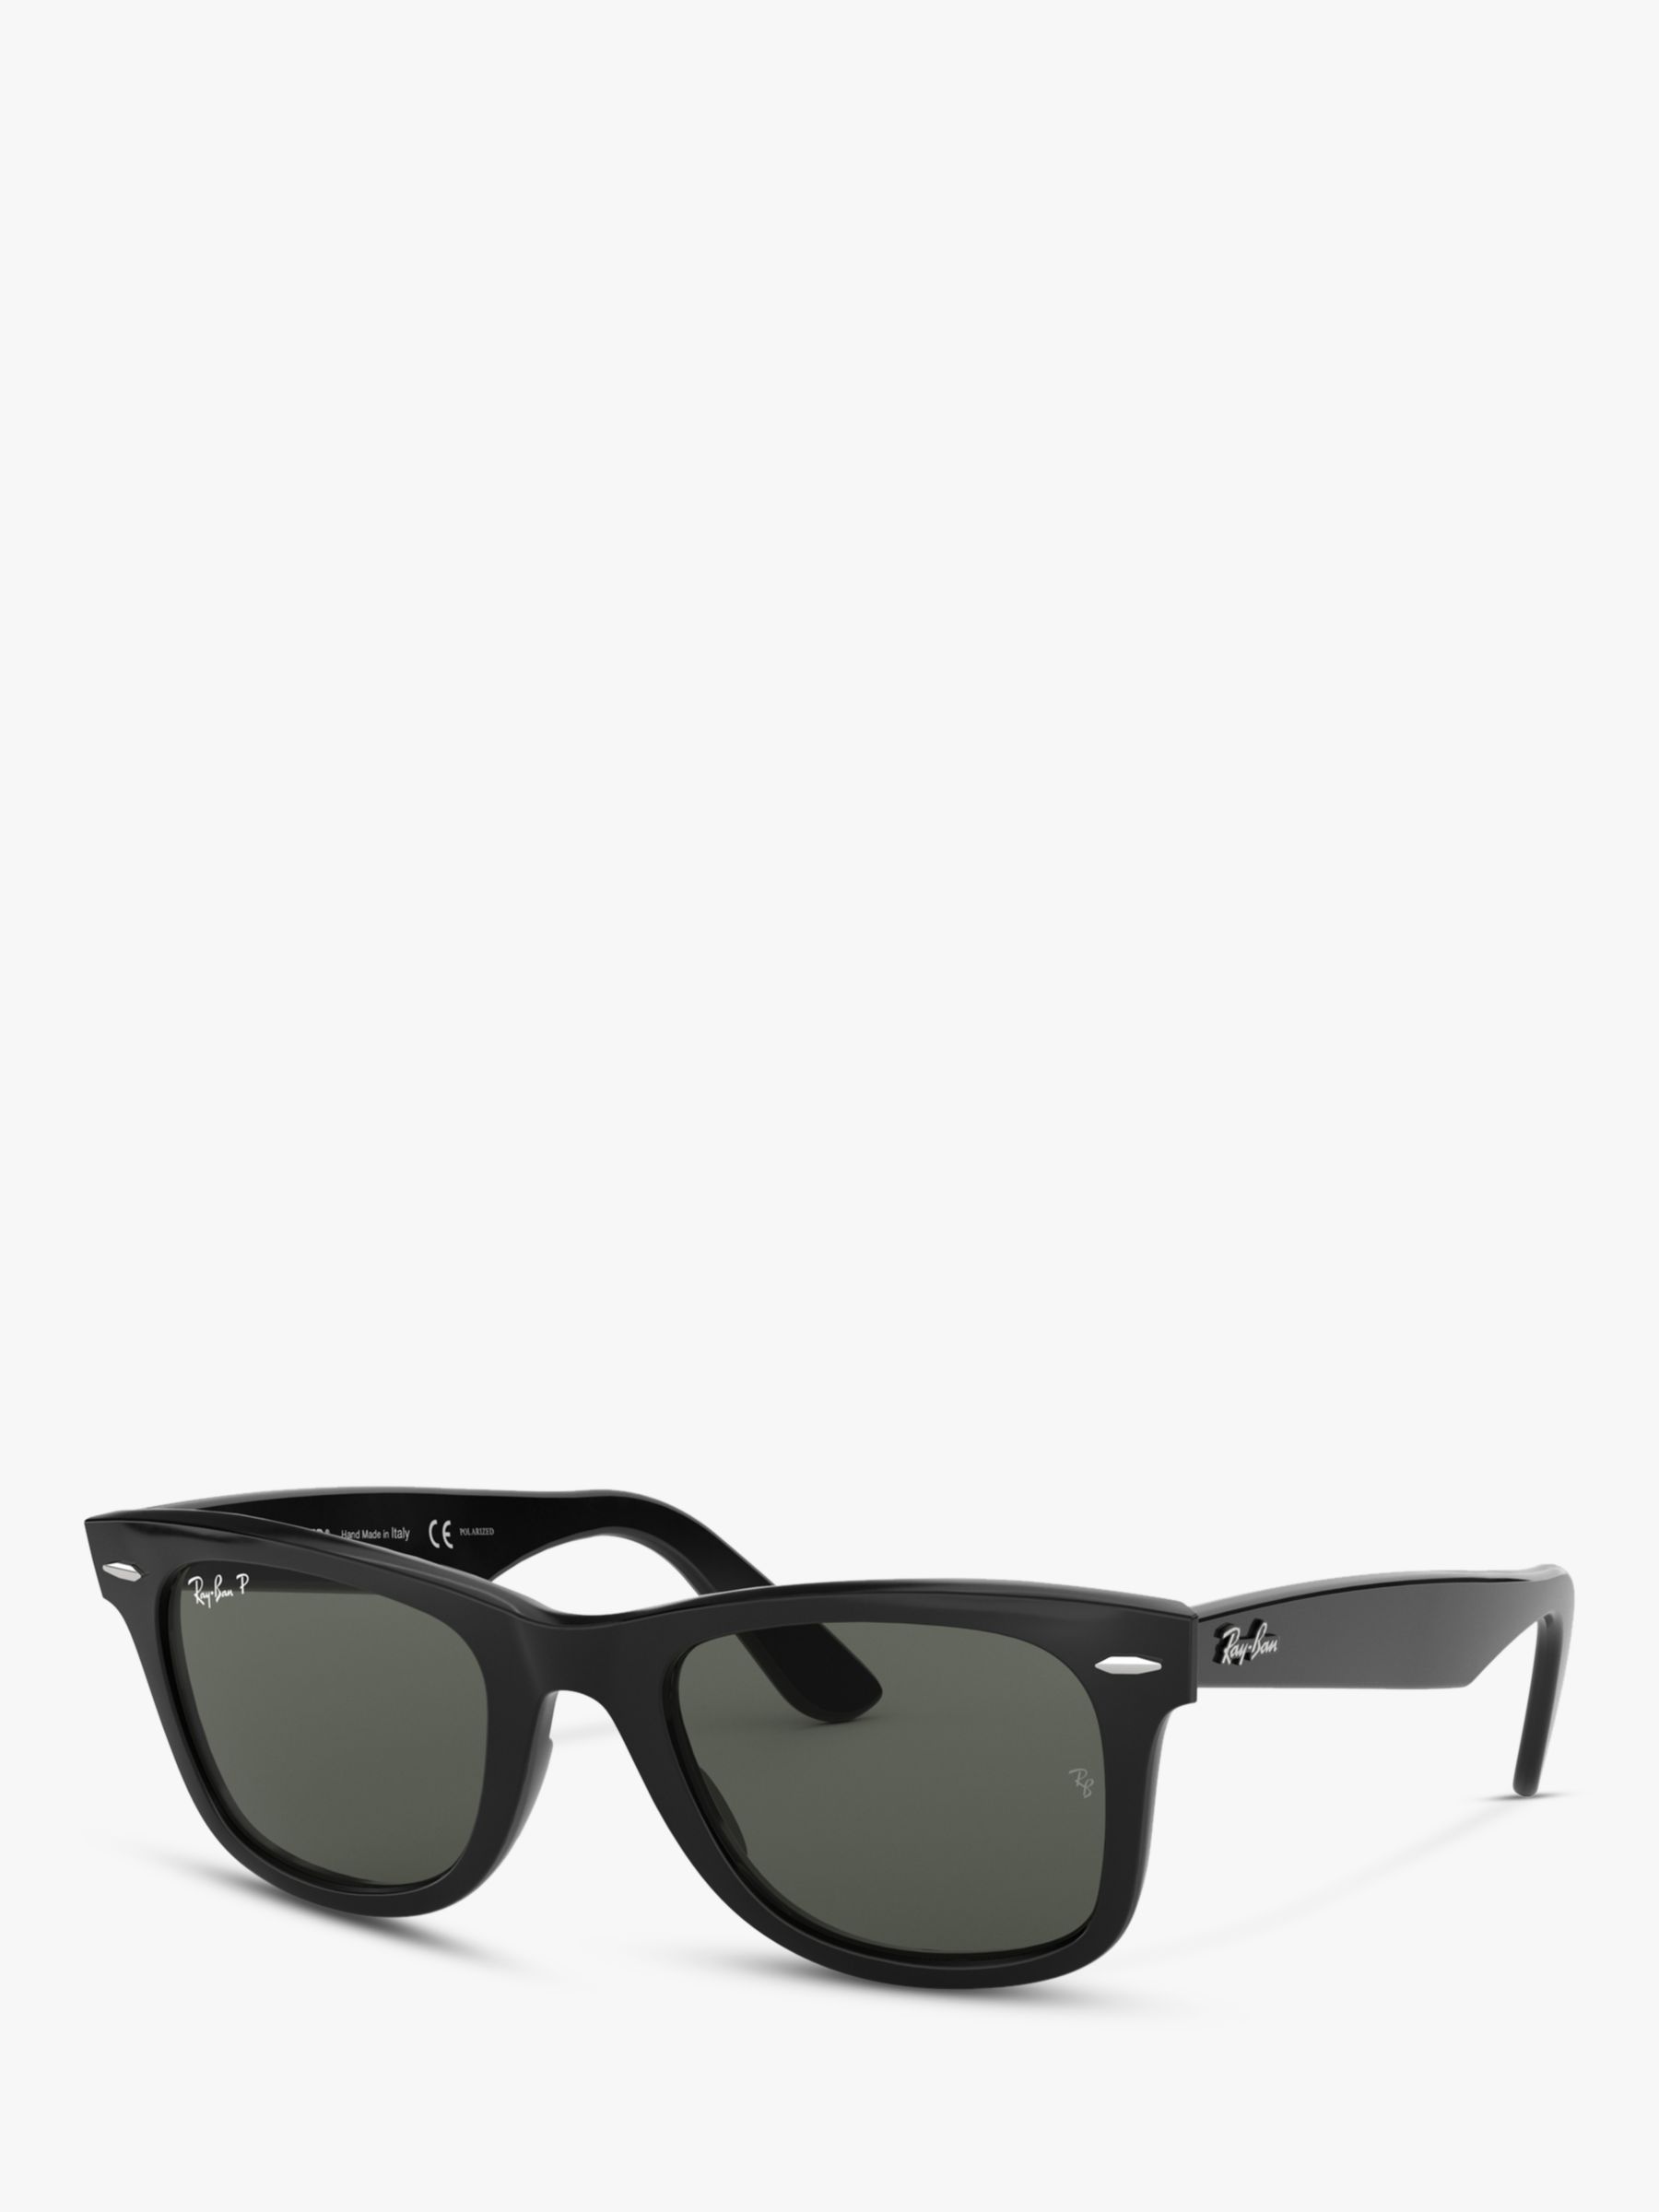 Ray-Ban RB2140 Polarised Wayfarer Sunglasses, Black at John Lewis & Partners